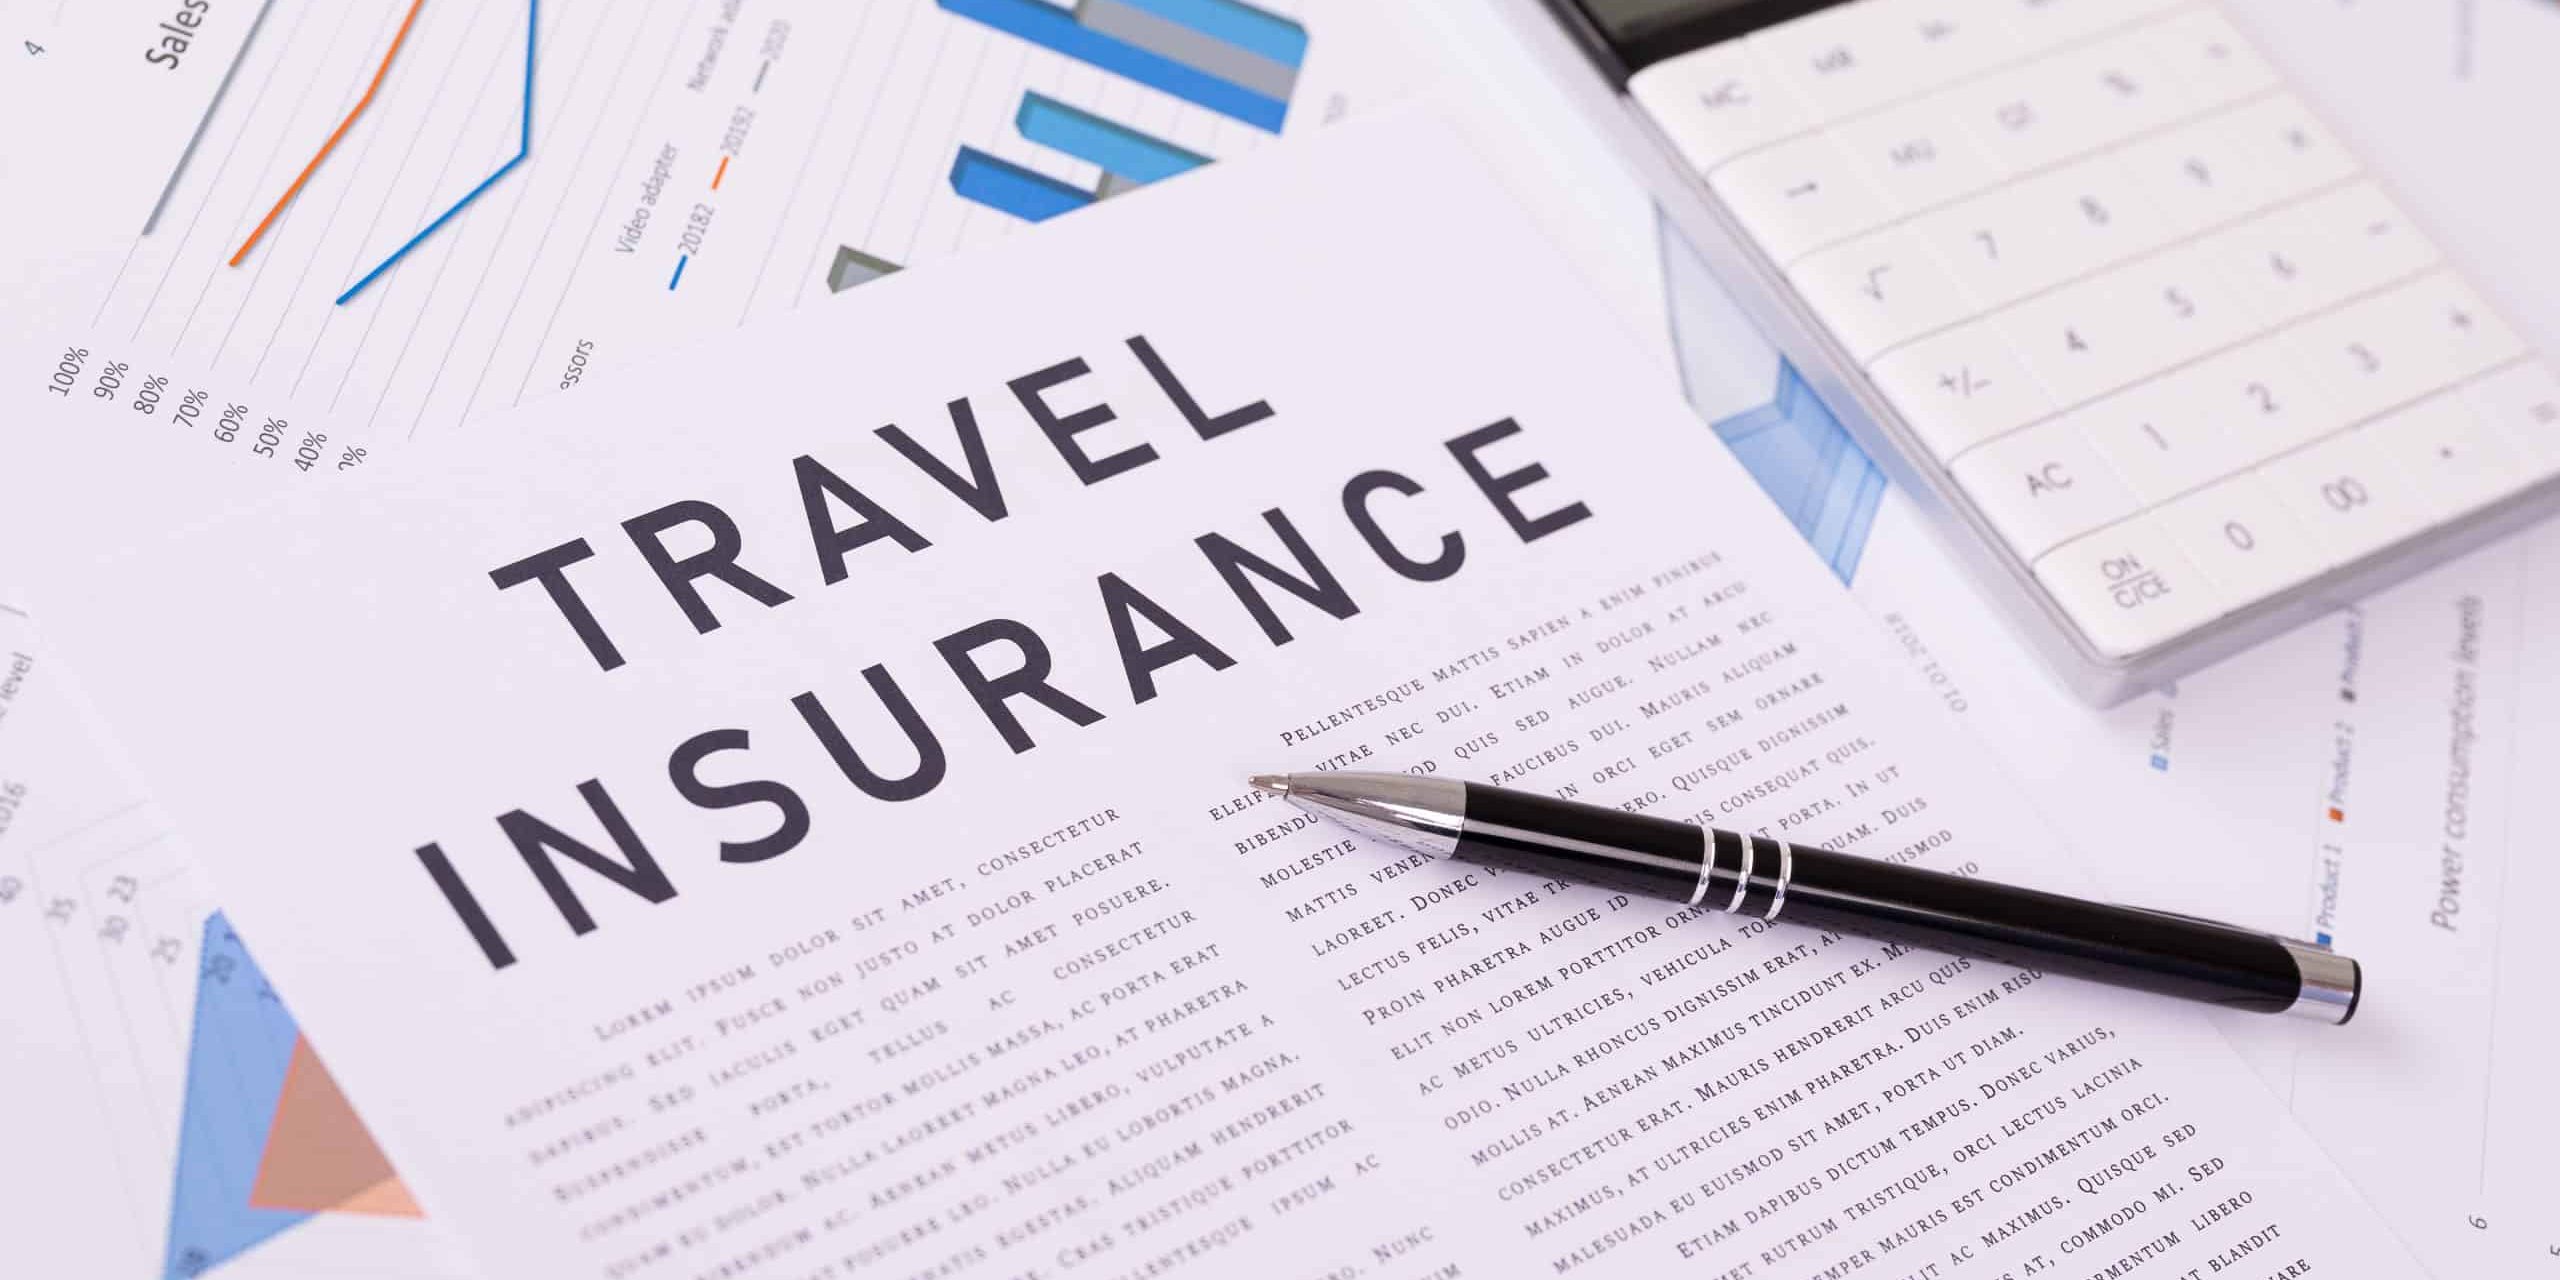 travel insurance concept